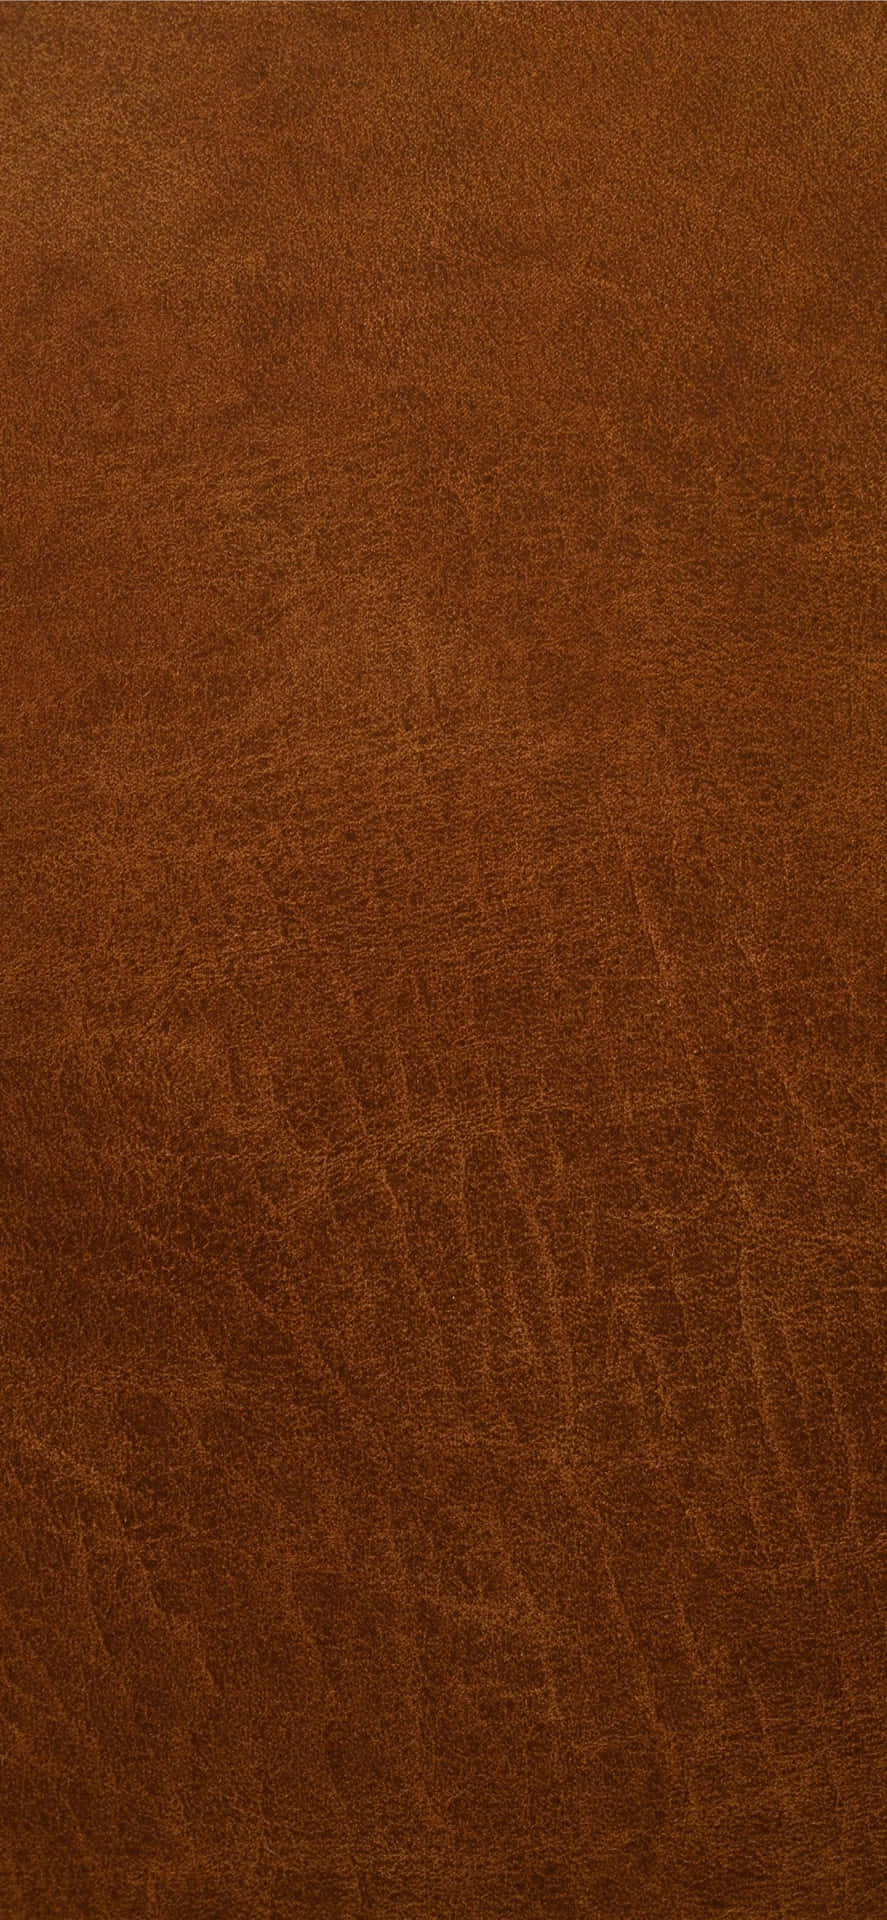 Elegant Brown Leather Texture Wallpaper